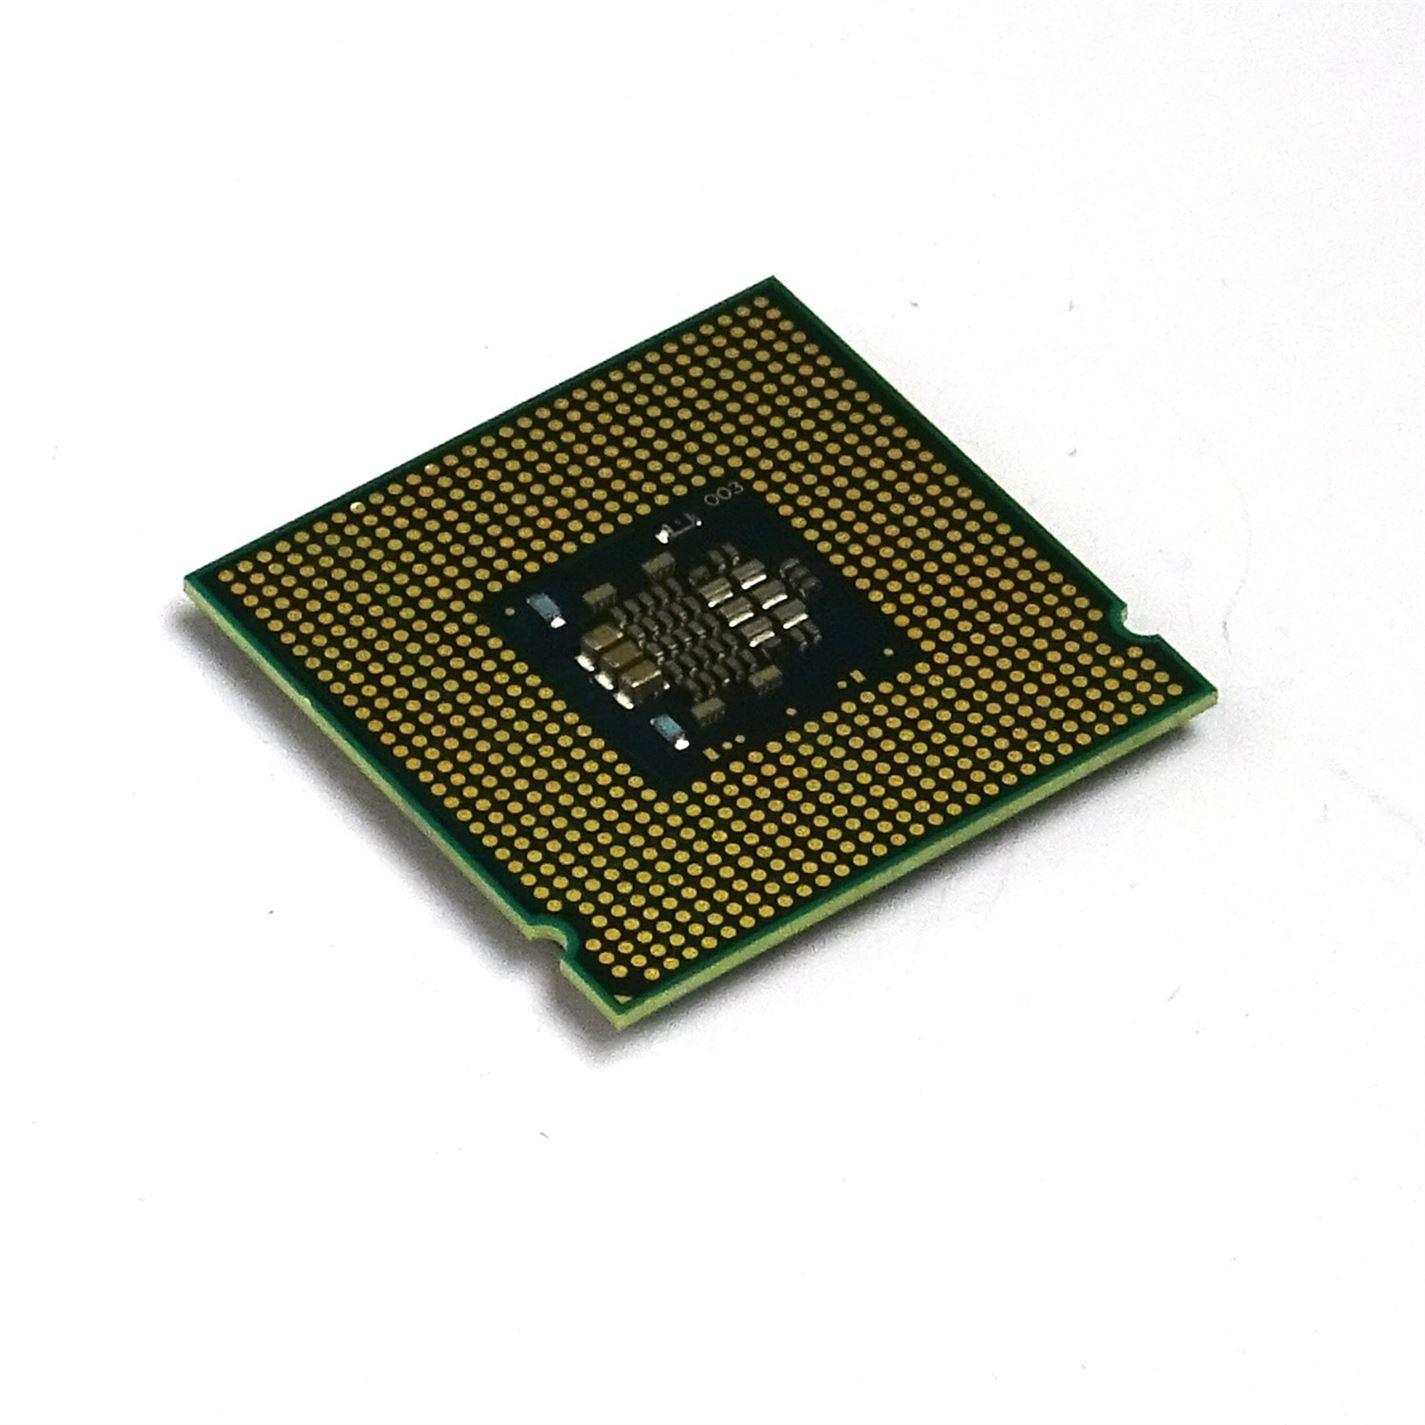 Pre Owned - Intel E1200 - Celeron Dual Core - SLAQW - 1.6Ghz - UK Seller